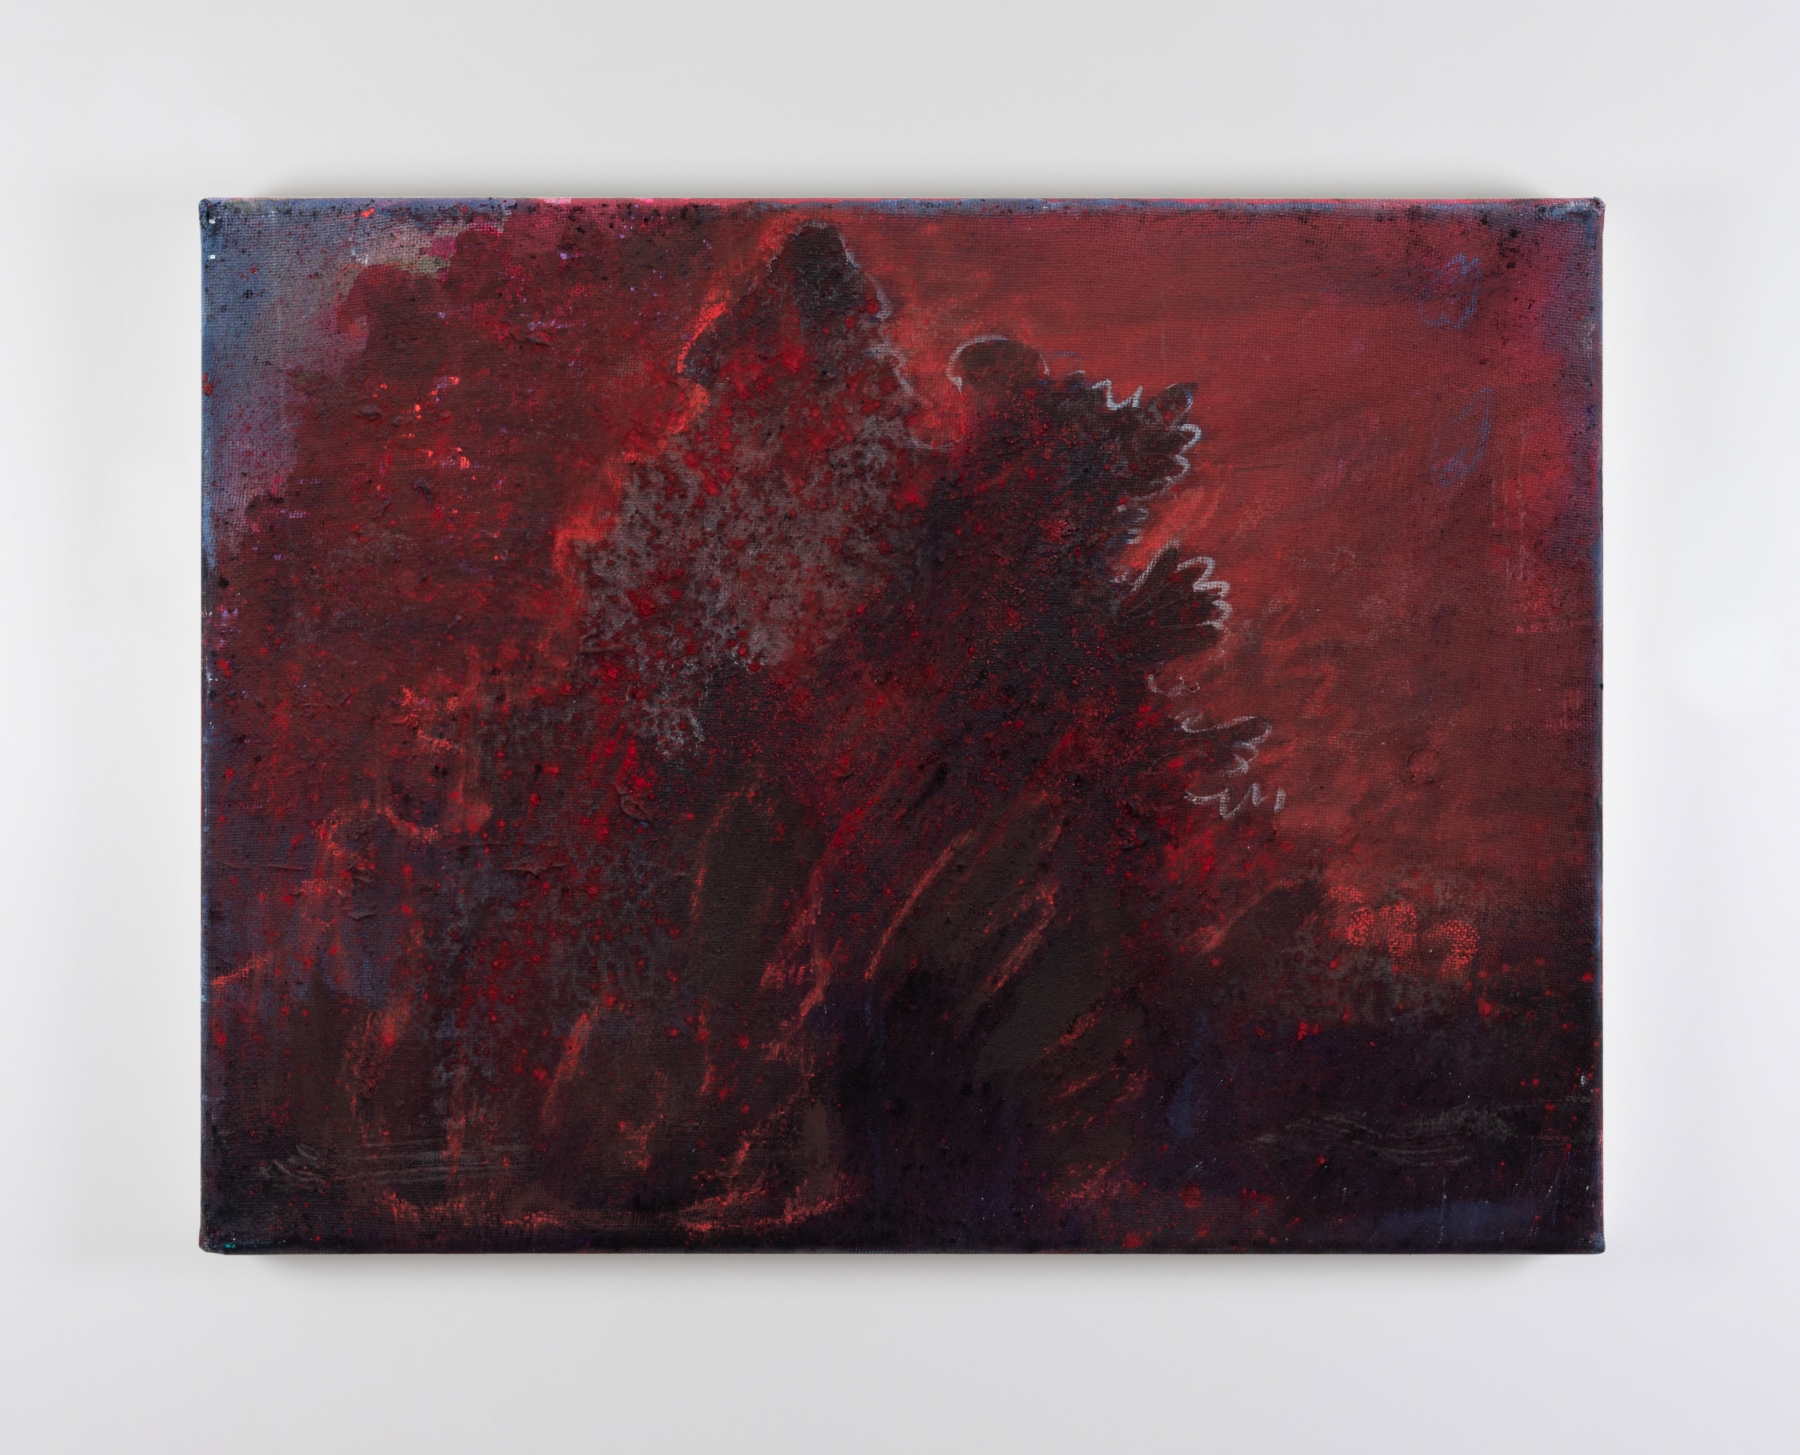 Elizabeth Magill&nbsp;
Radial, 2021
oil on canvas
30 x 40 cm / 11.8 x 15.7 in &nbsp;&nbsp;